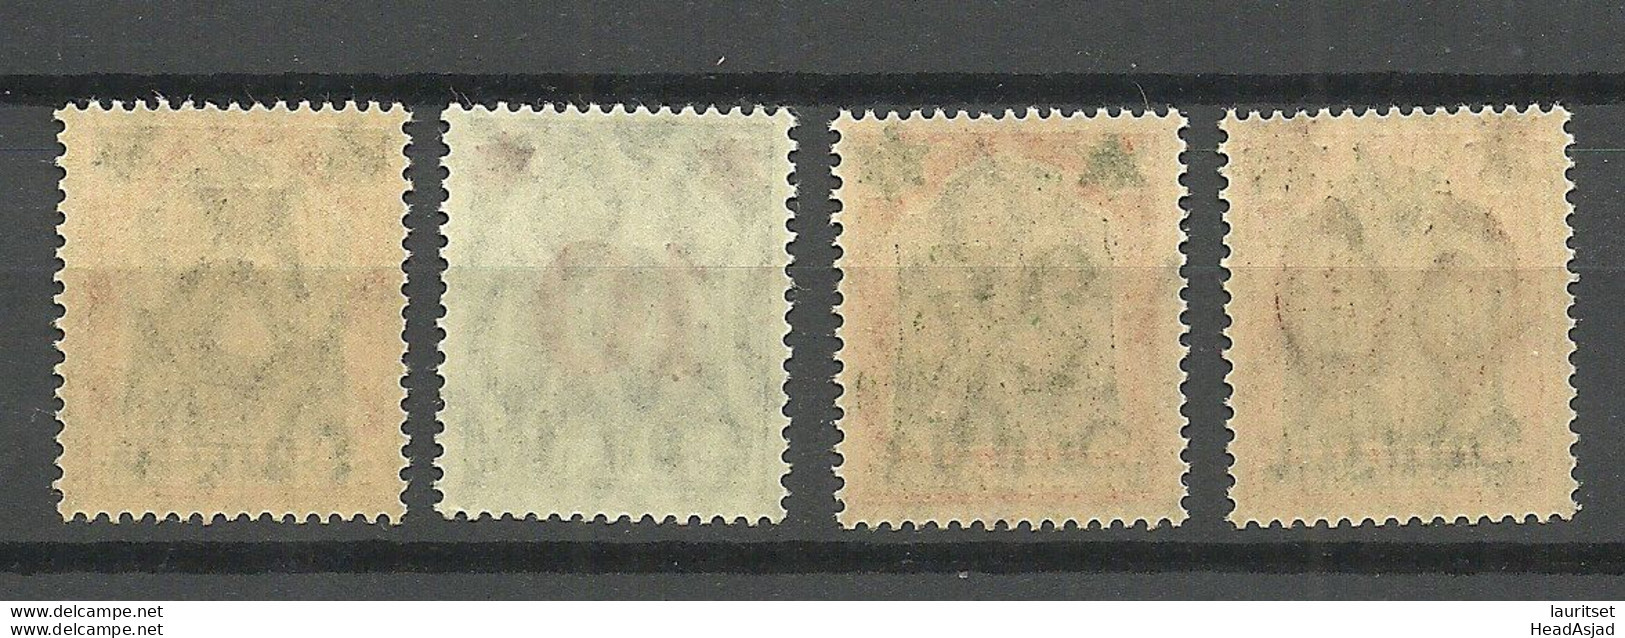 Germany Deutschland DANZIG 1920 Michel 16 - 19 MNH - Mint